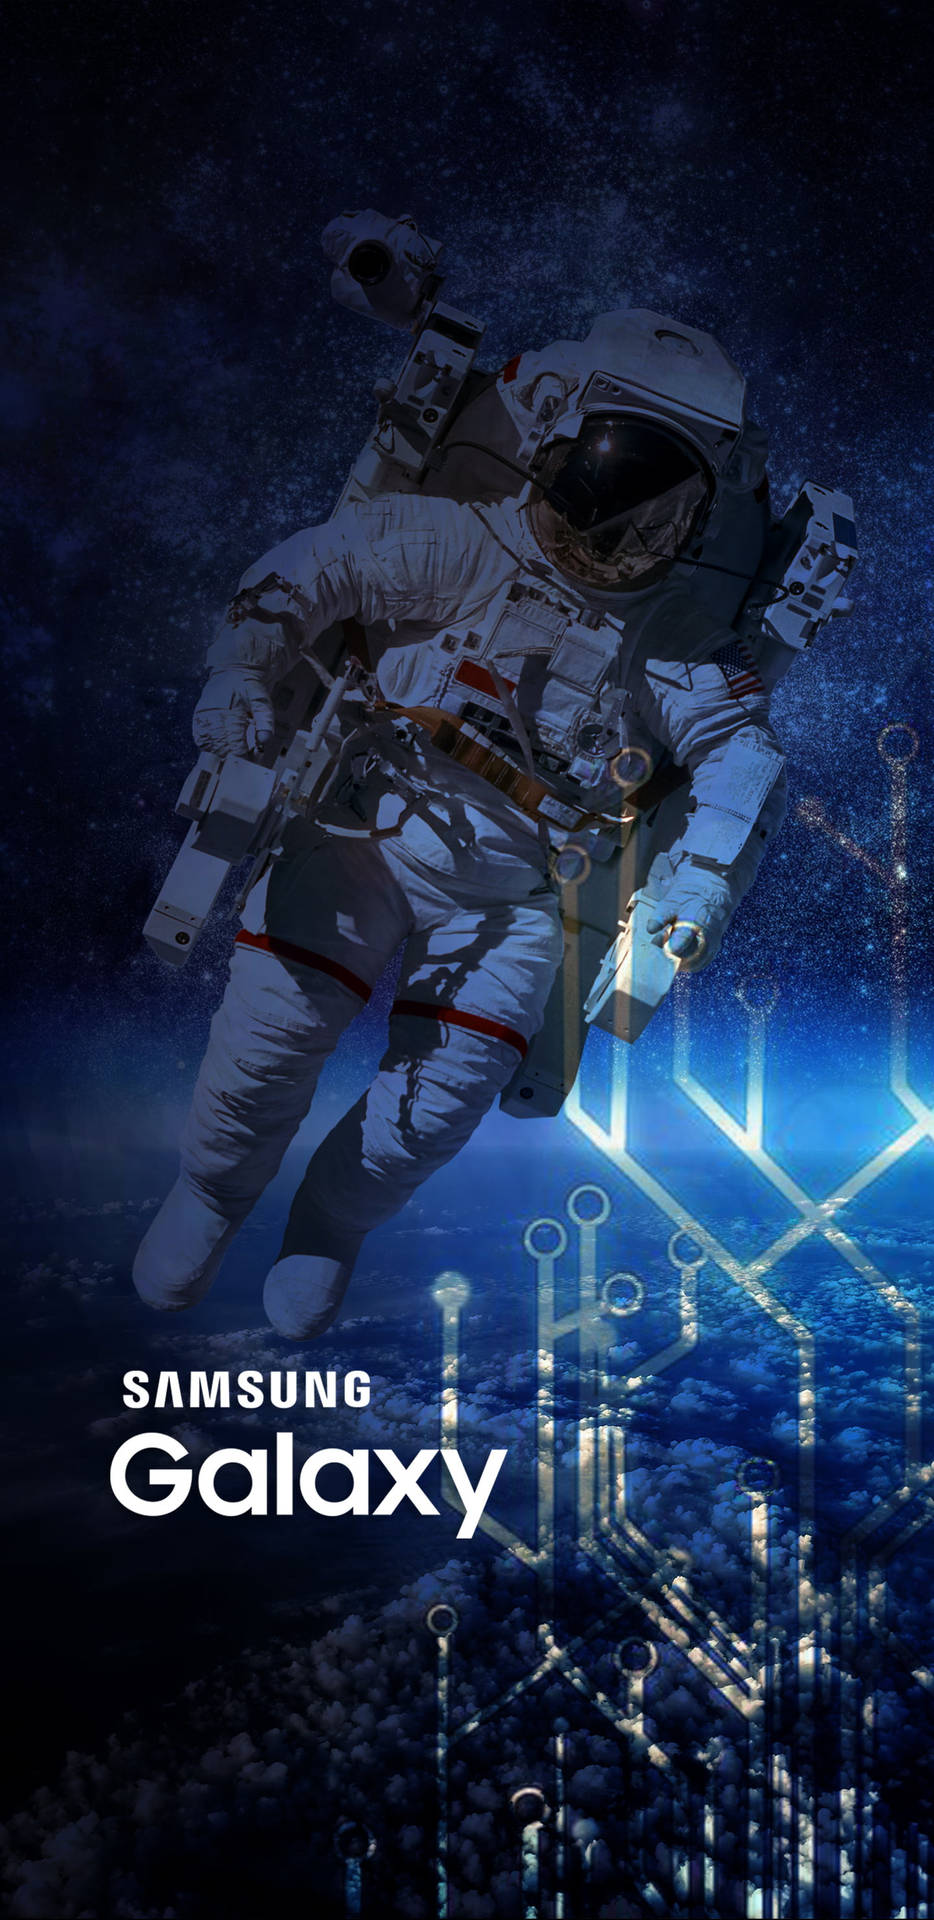 Samsung Galaxy Astronaut In Space Background